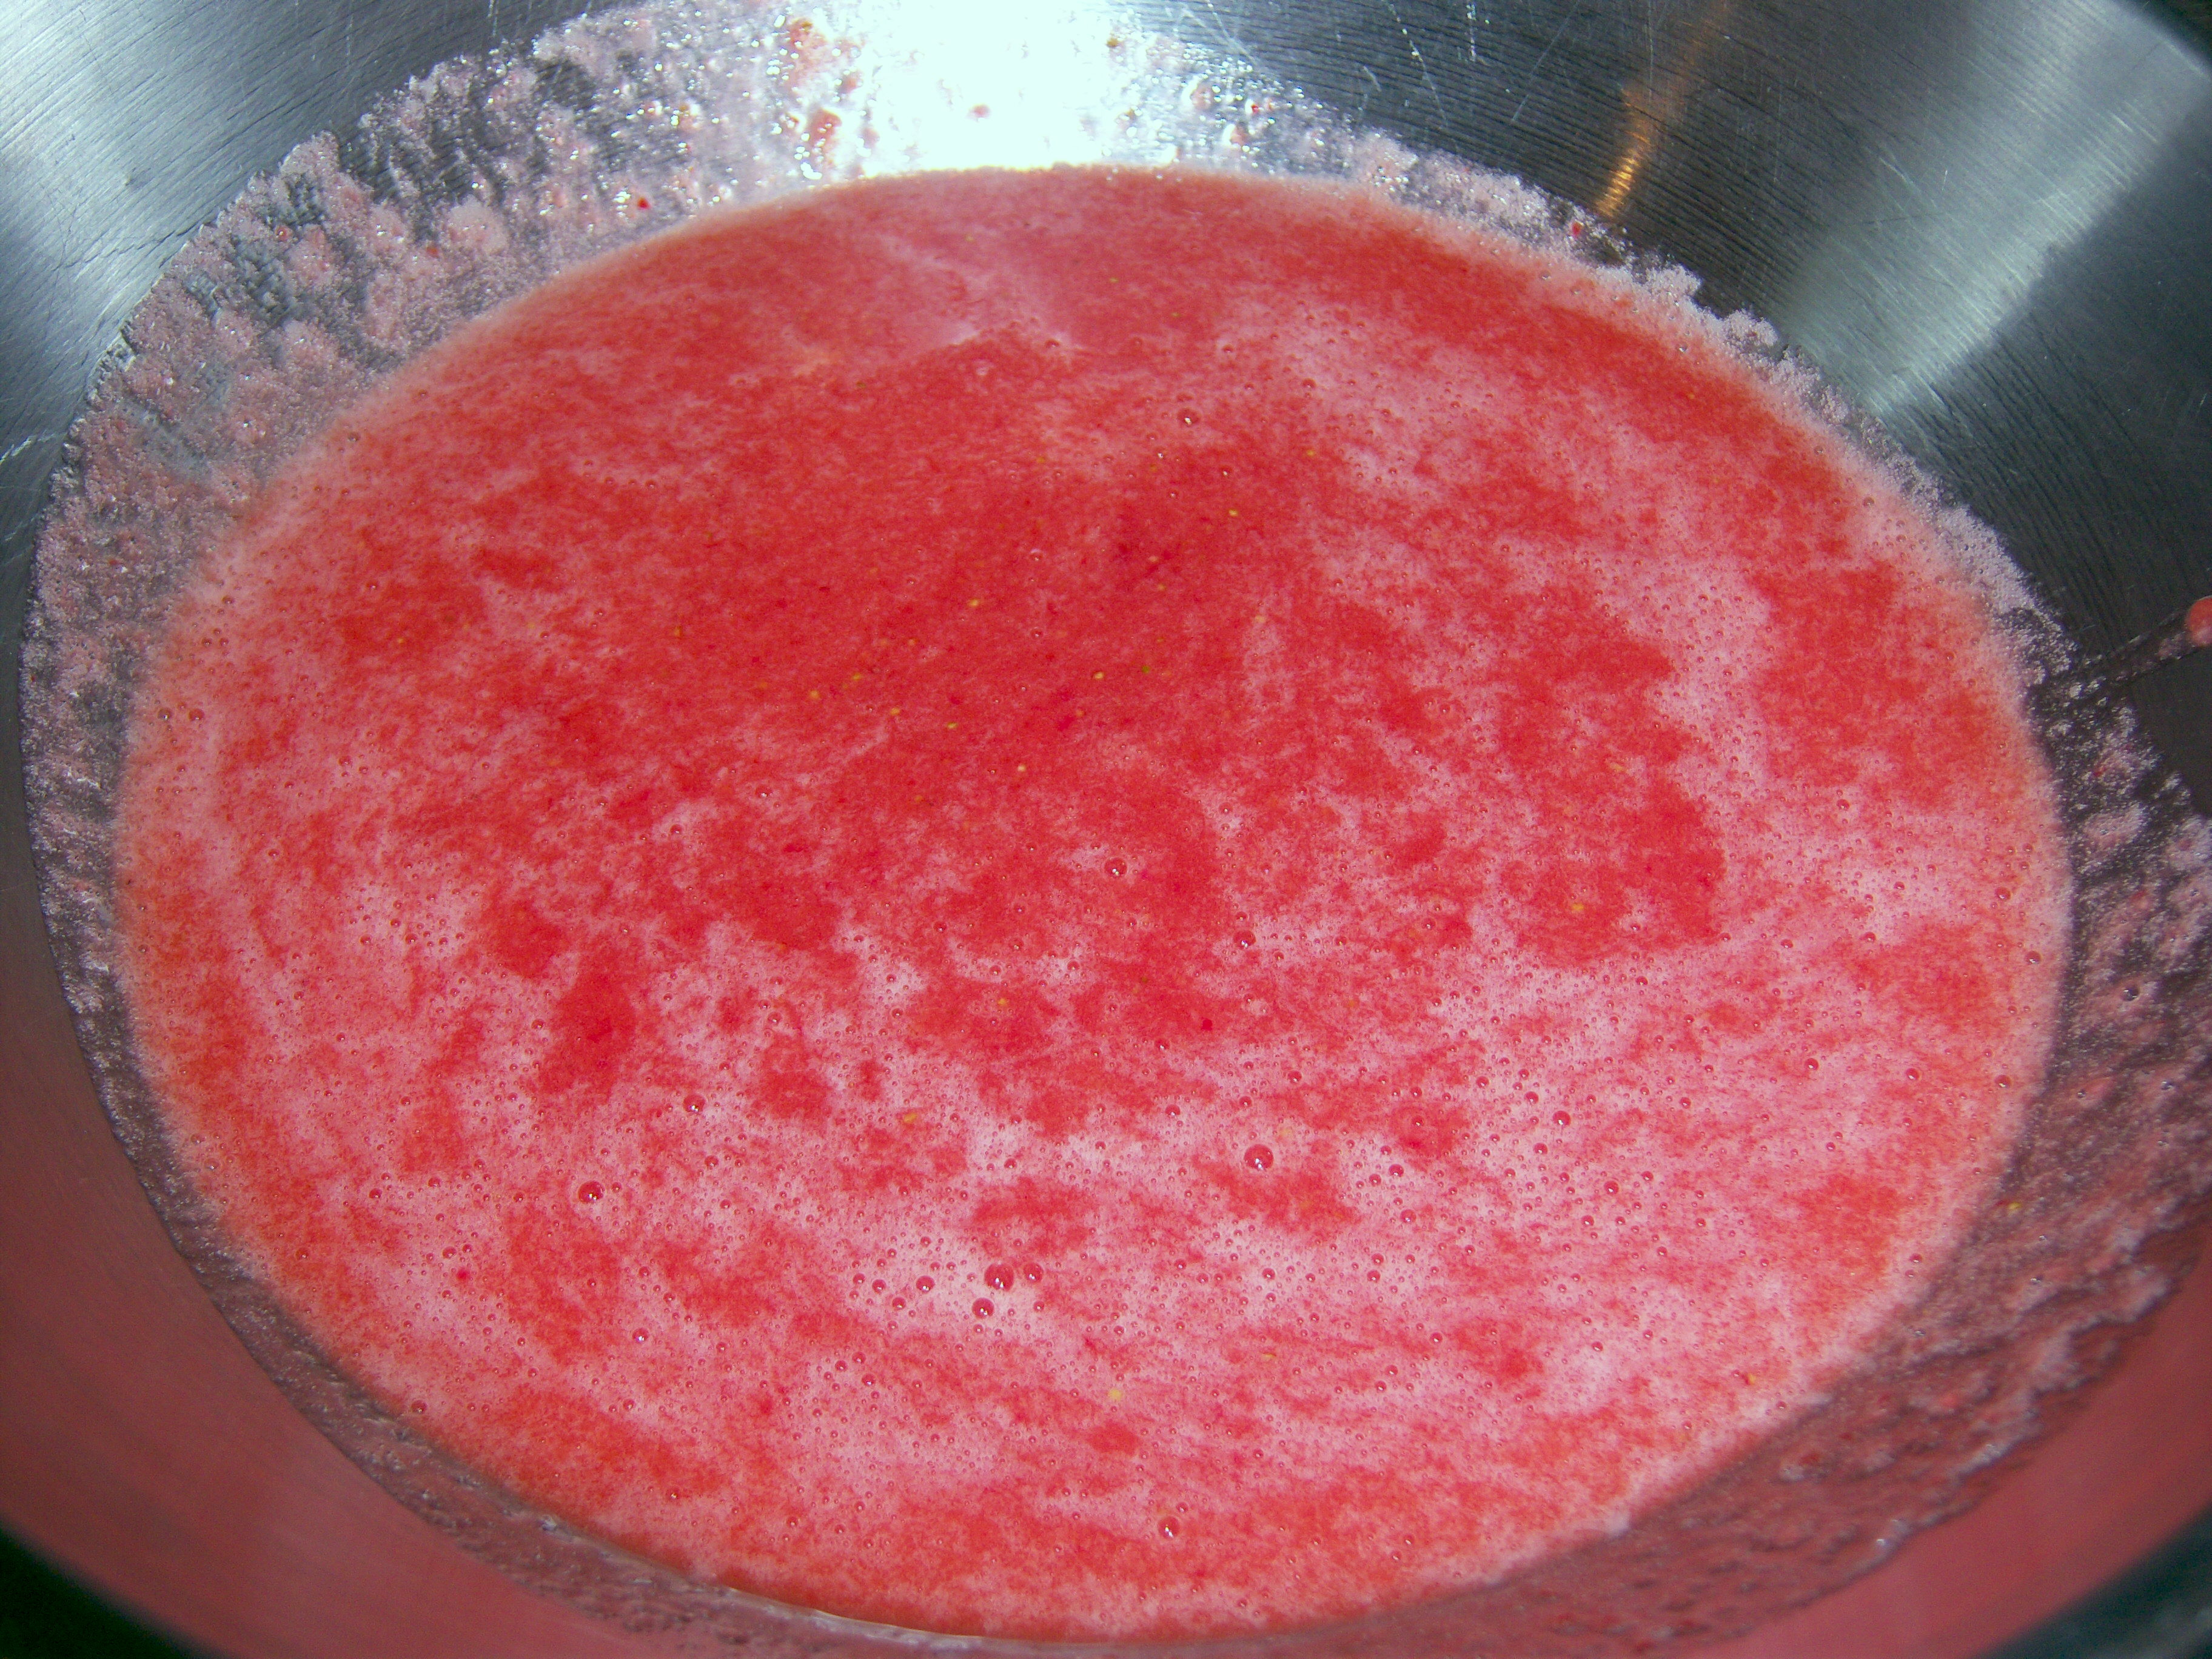 Pureed strawberry